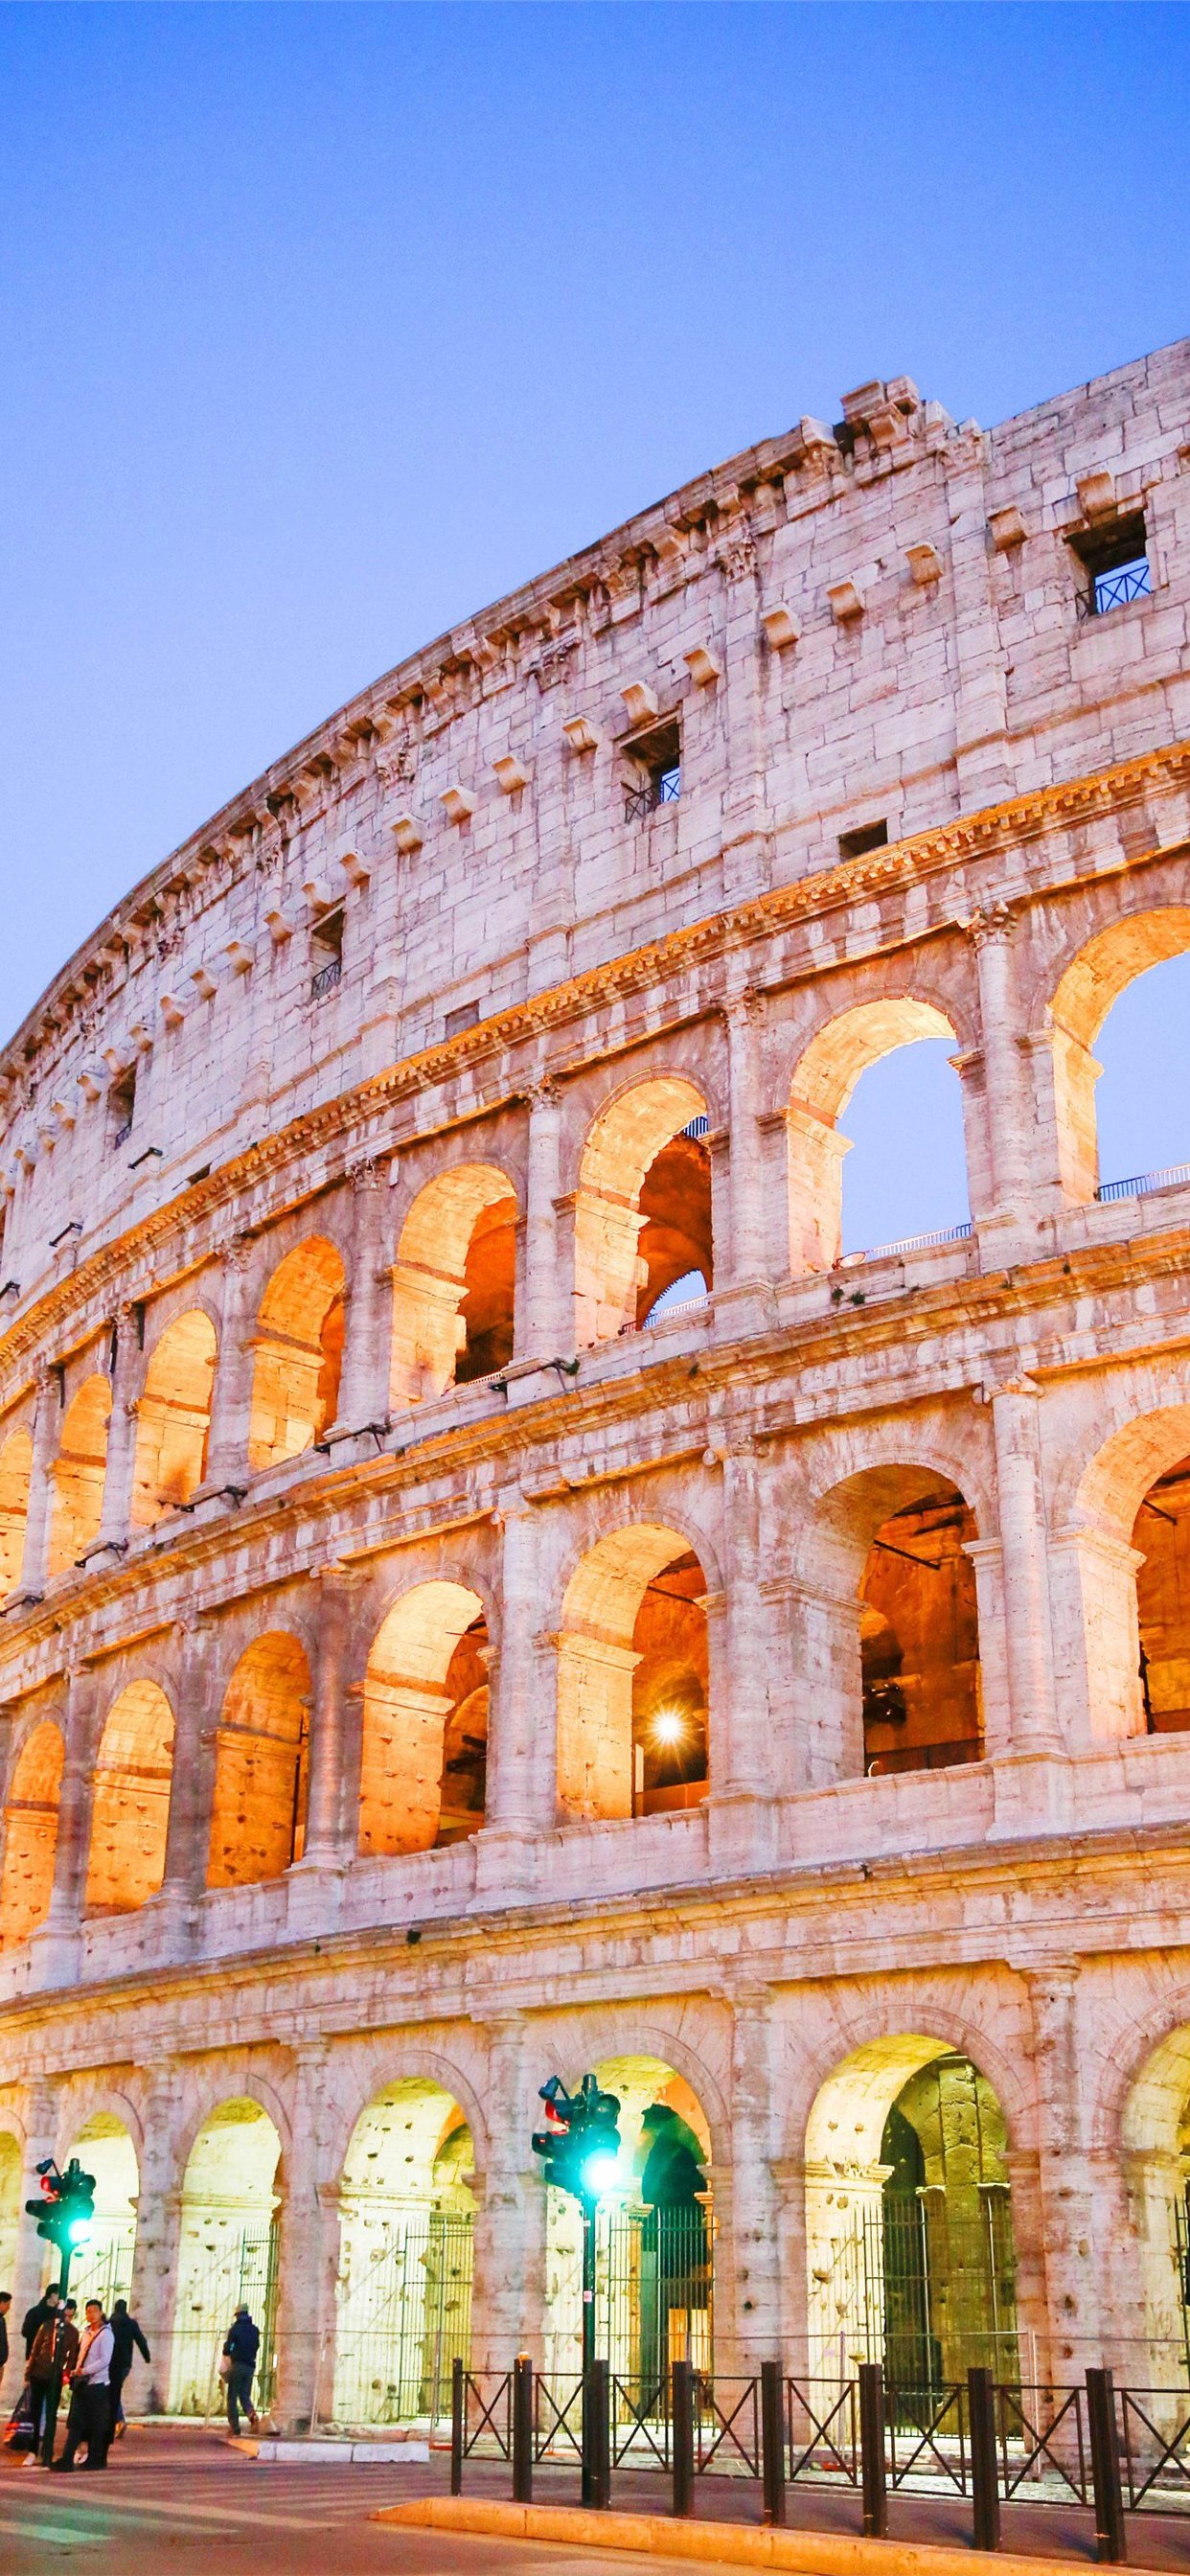 Colosseum Images  Free Download on Freepik